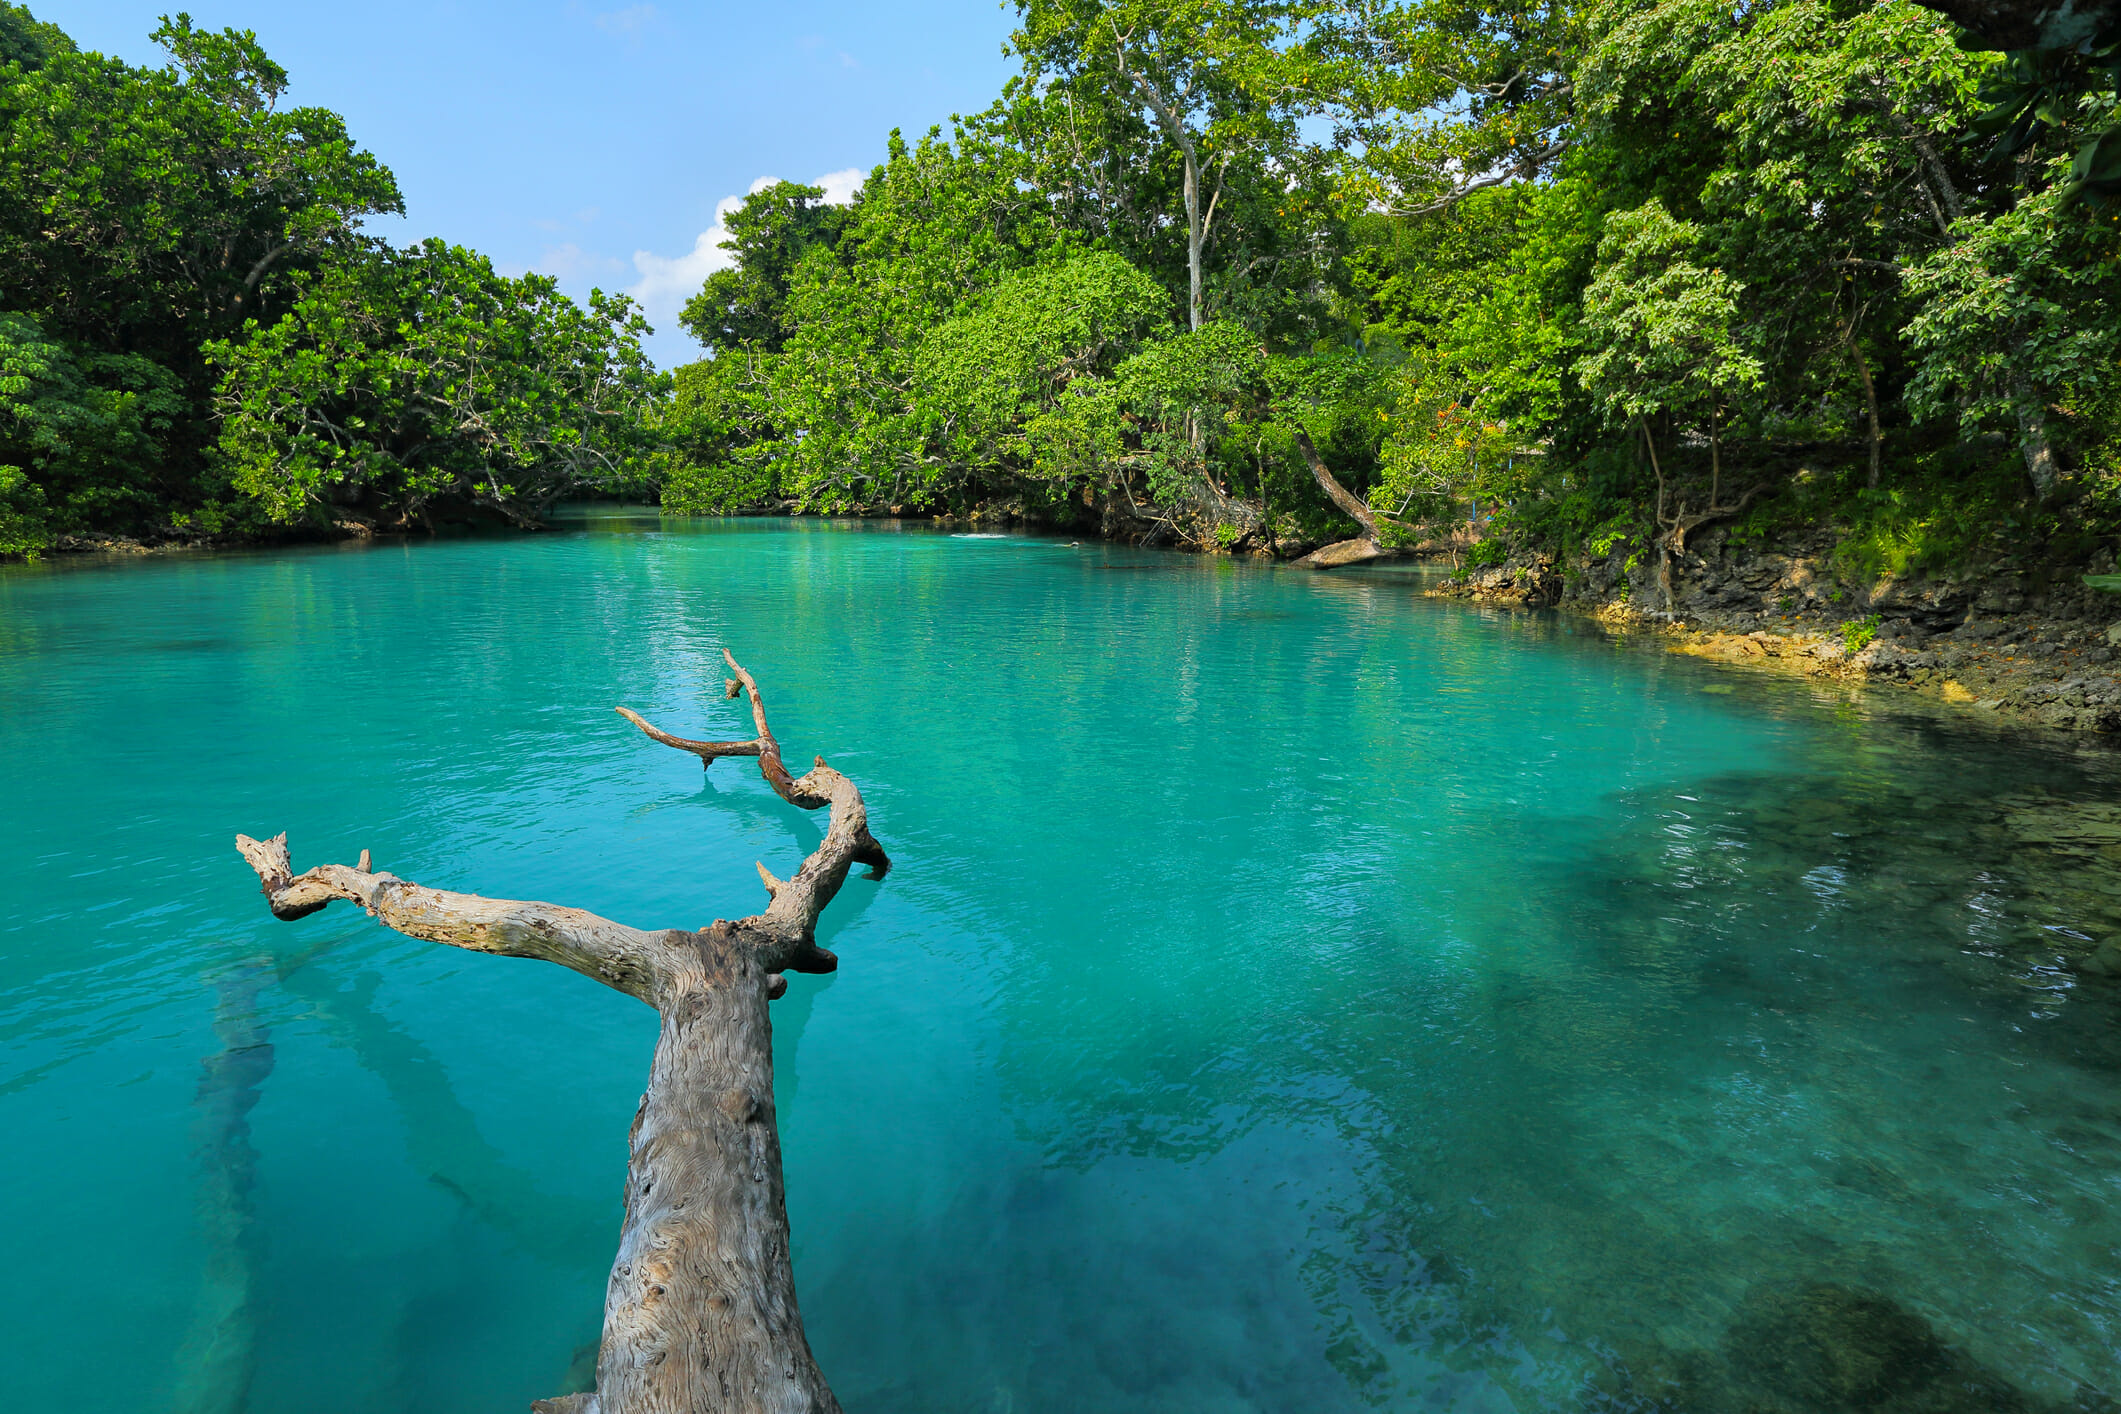 Blue lagoon swimming hole where fresh water meets salt water.